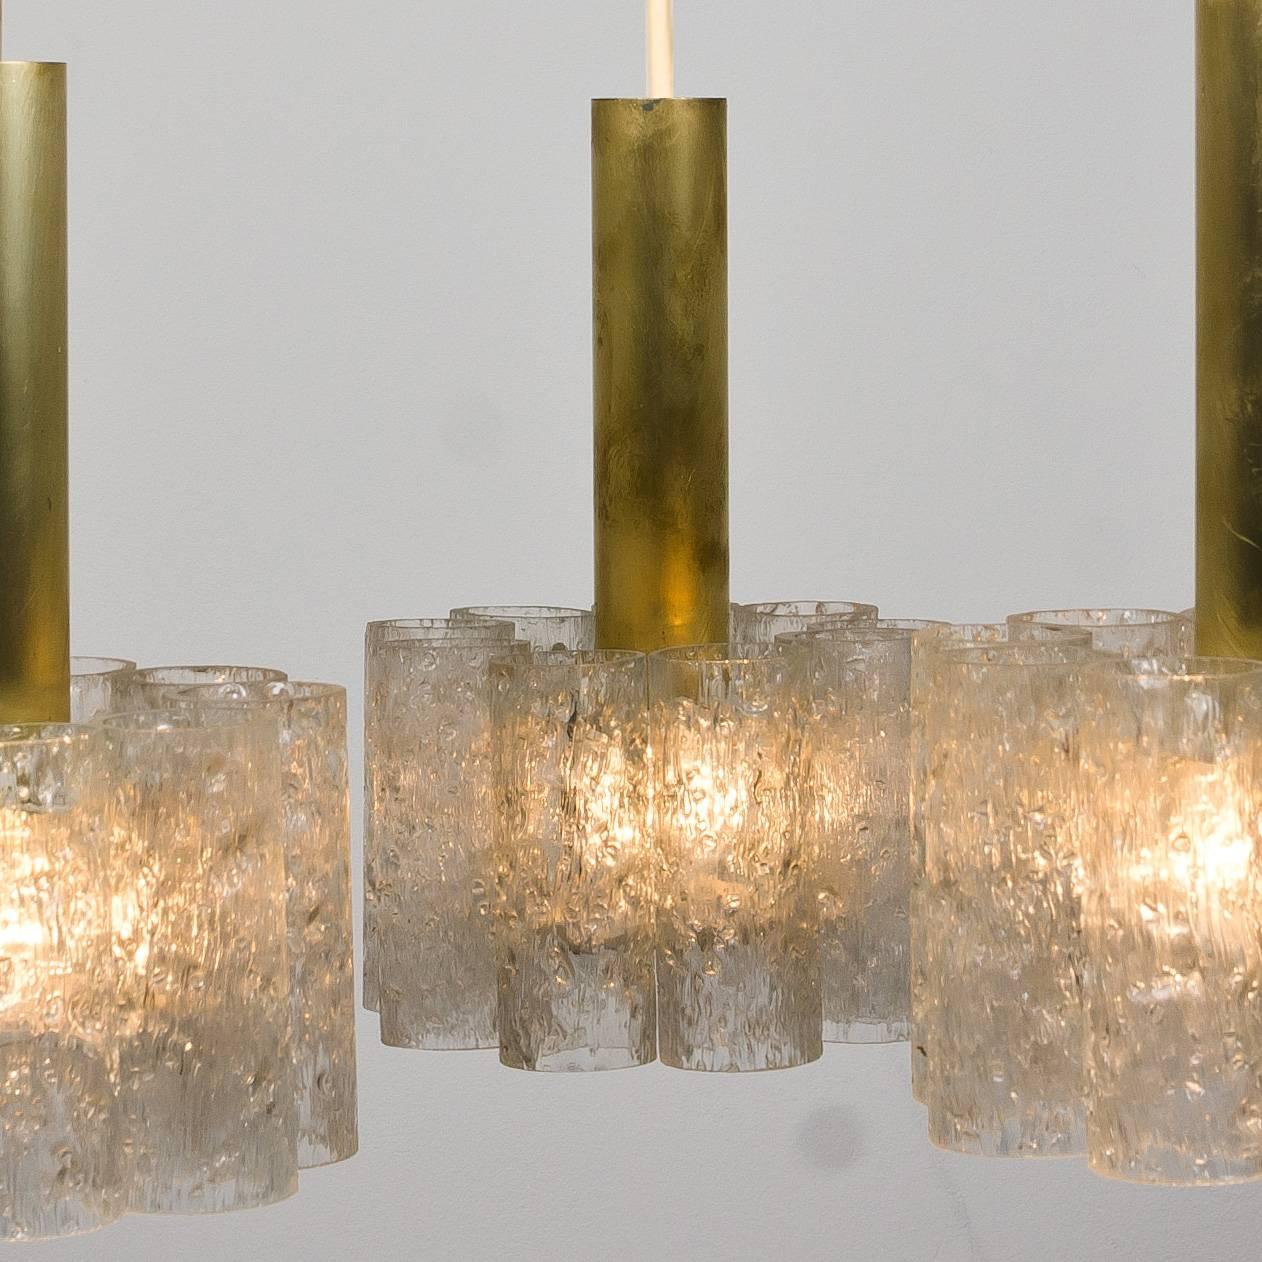 Doria light fixture, with five Murano textured glass tube pendants on polished nickel stems, German, circa 1960s.